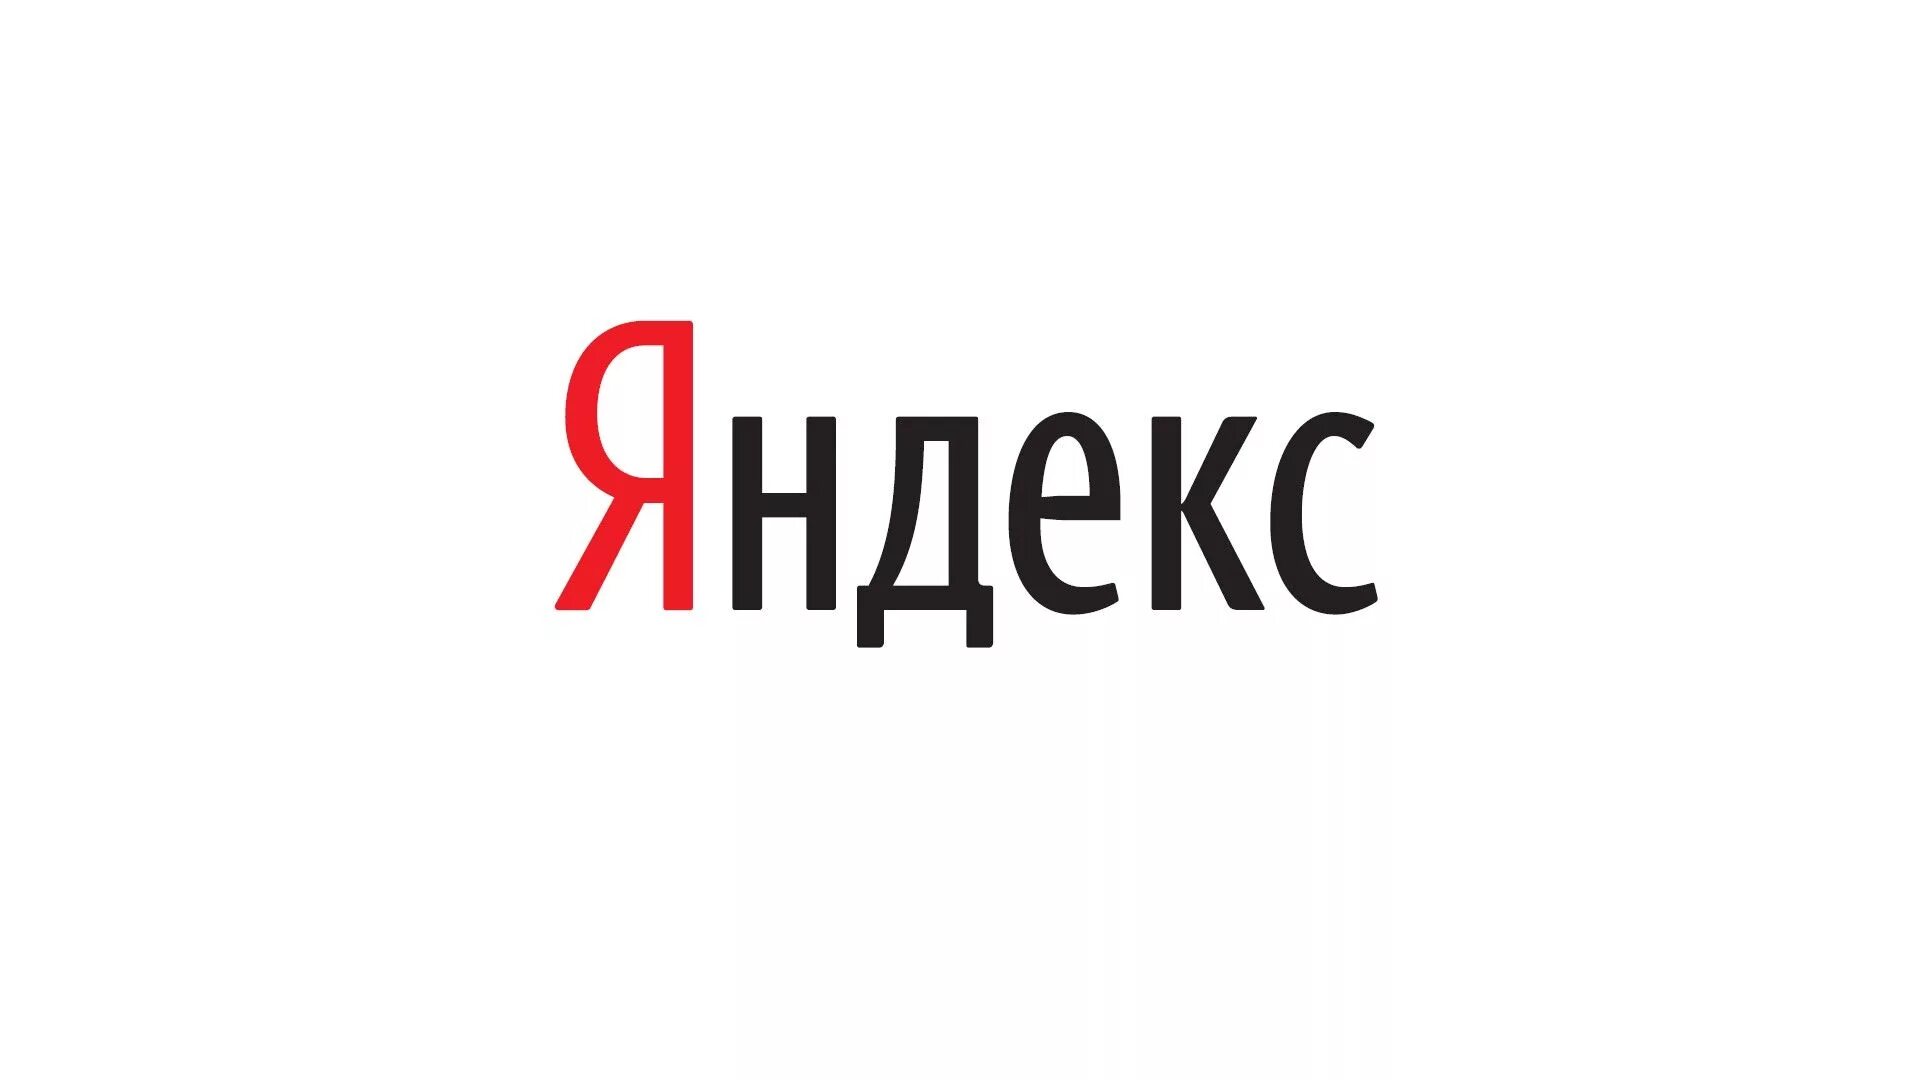 Kreativikfoto ru. Яндекс. Значок Яндекс. Яндекс надпись. Яникс.